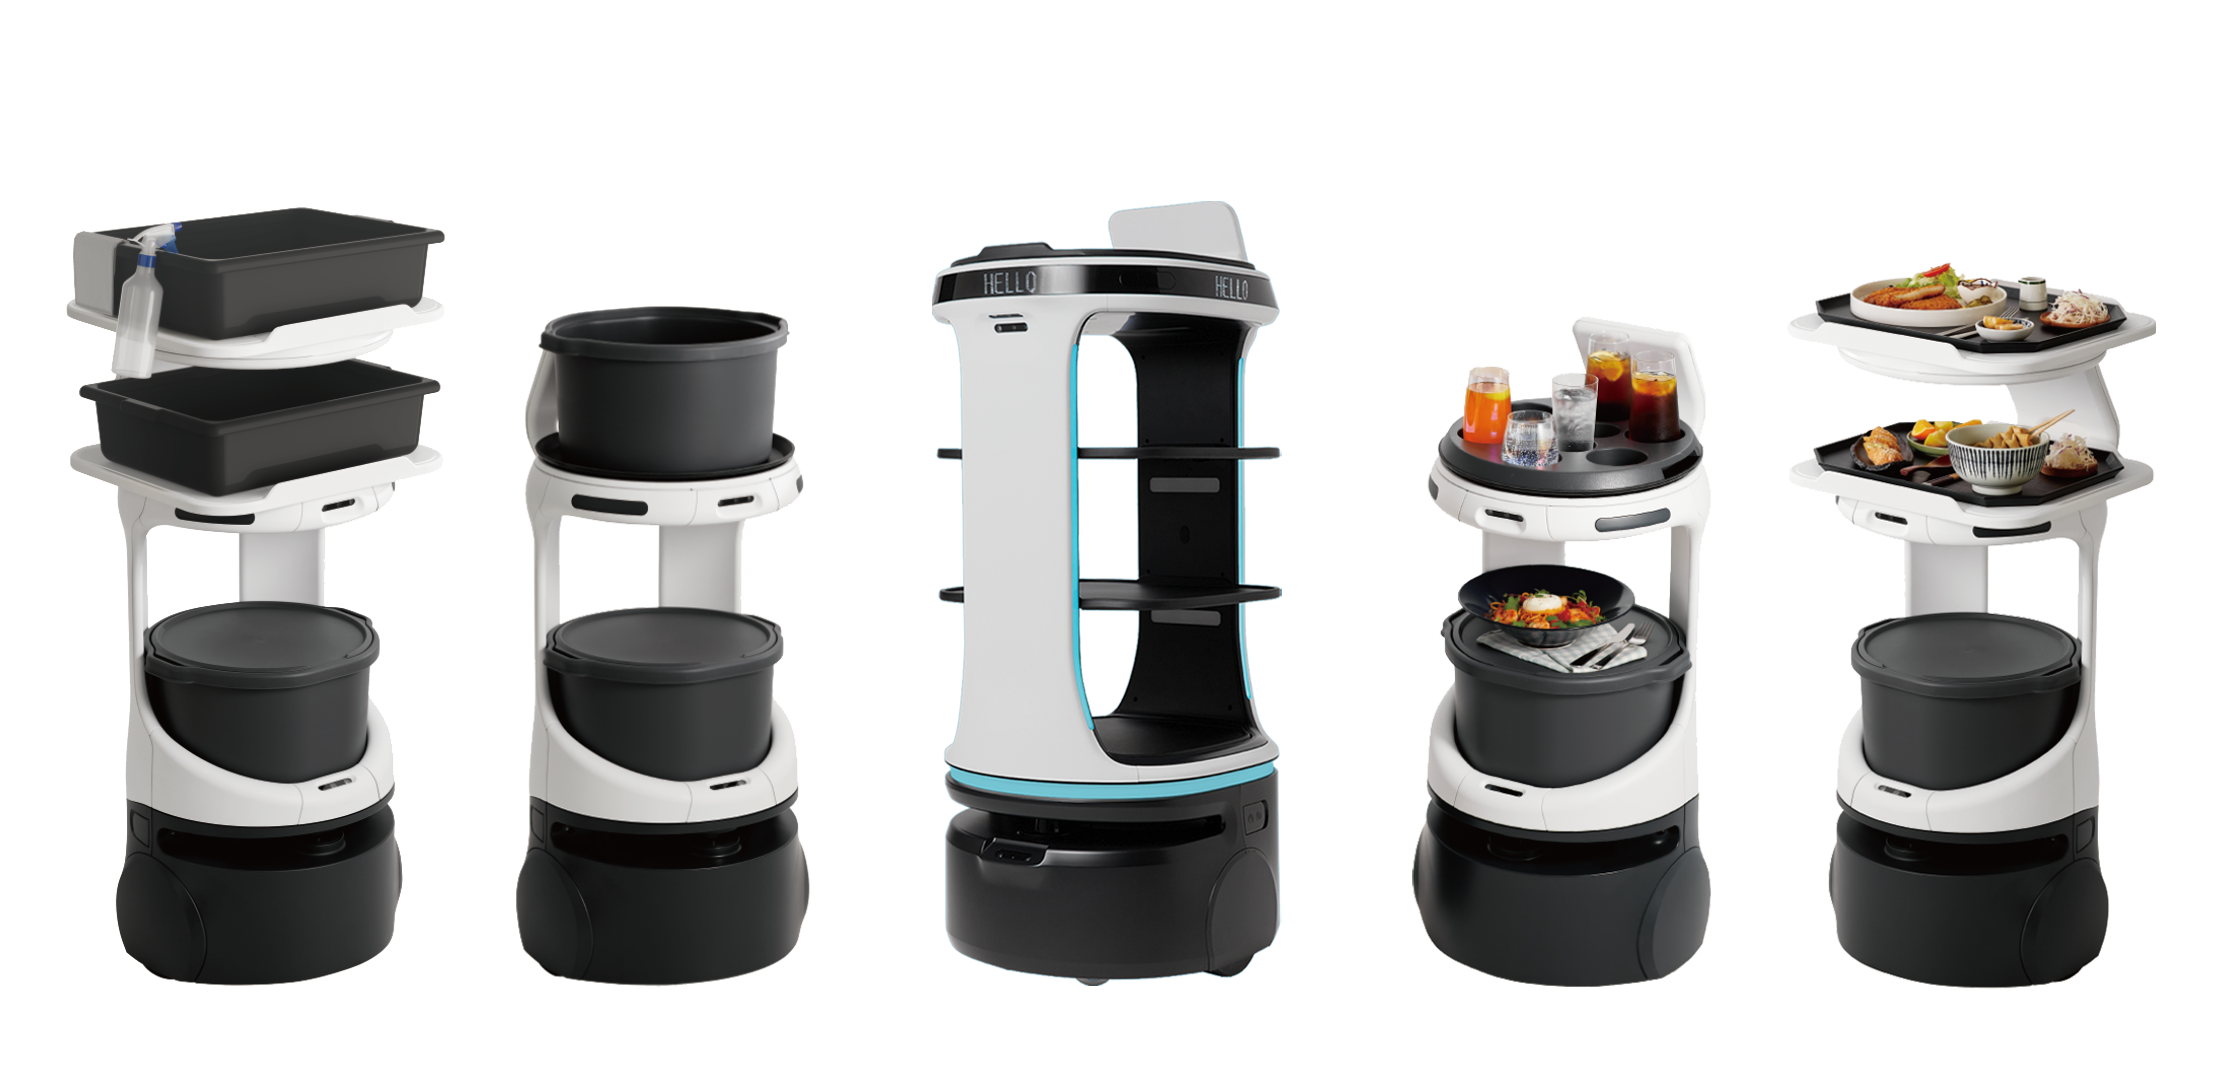 Food service robots, Bear Robotics SERVI and SERVI Mini models from MetaDolce Technologies